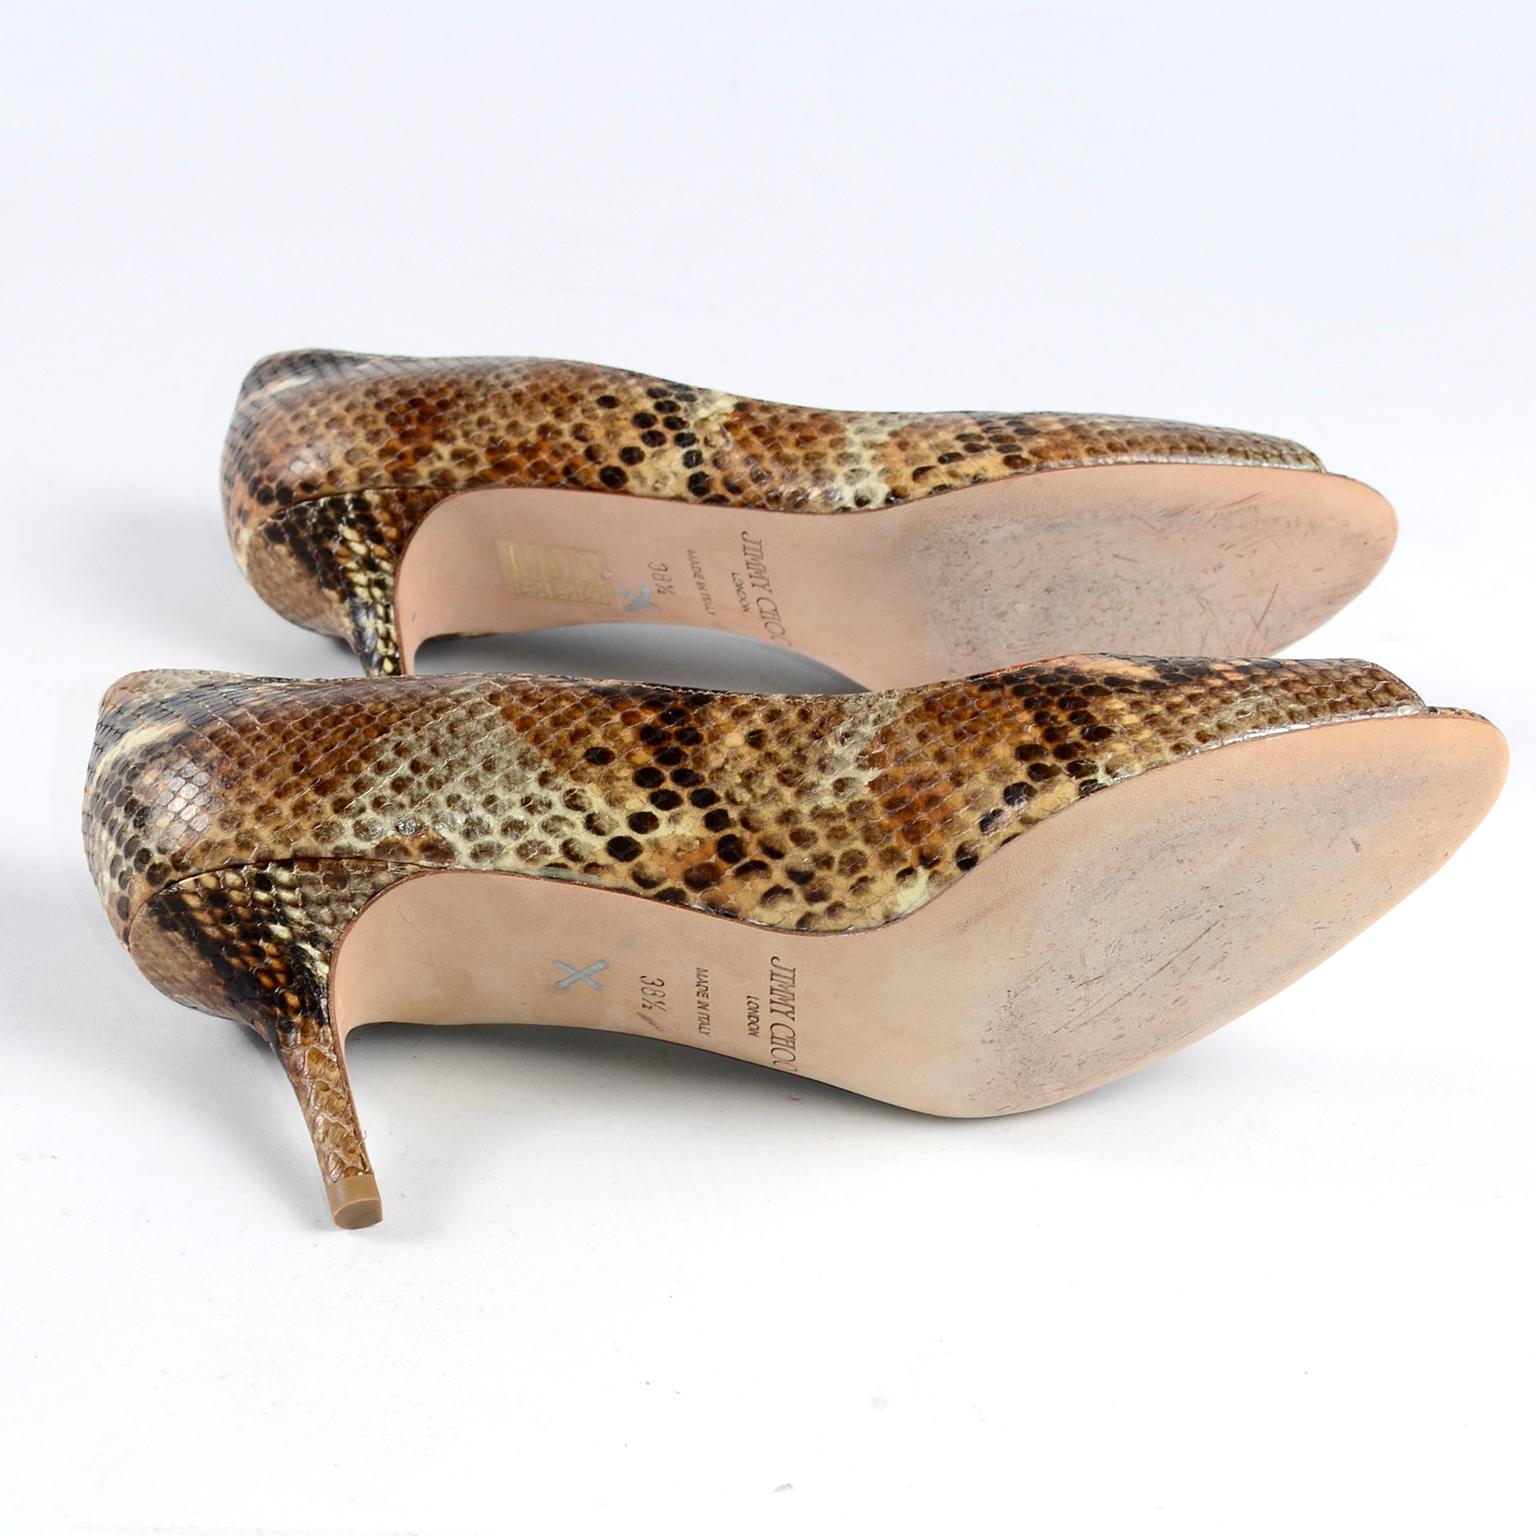 Jimmy Choo Isabel Python Snakeskin Peep Toe Kitten Heel Shoes Size 38.5 2